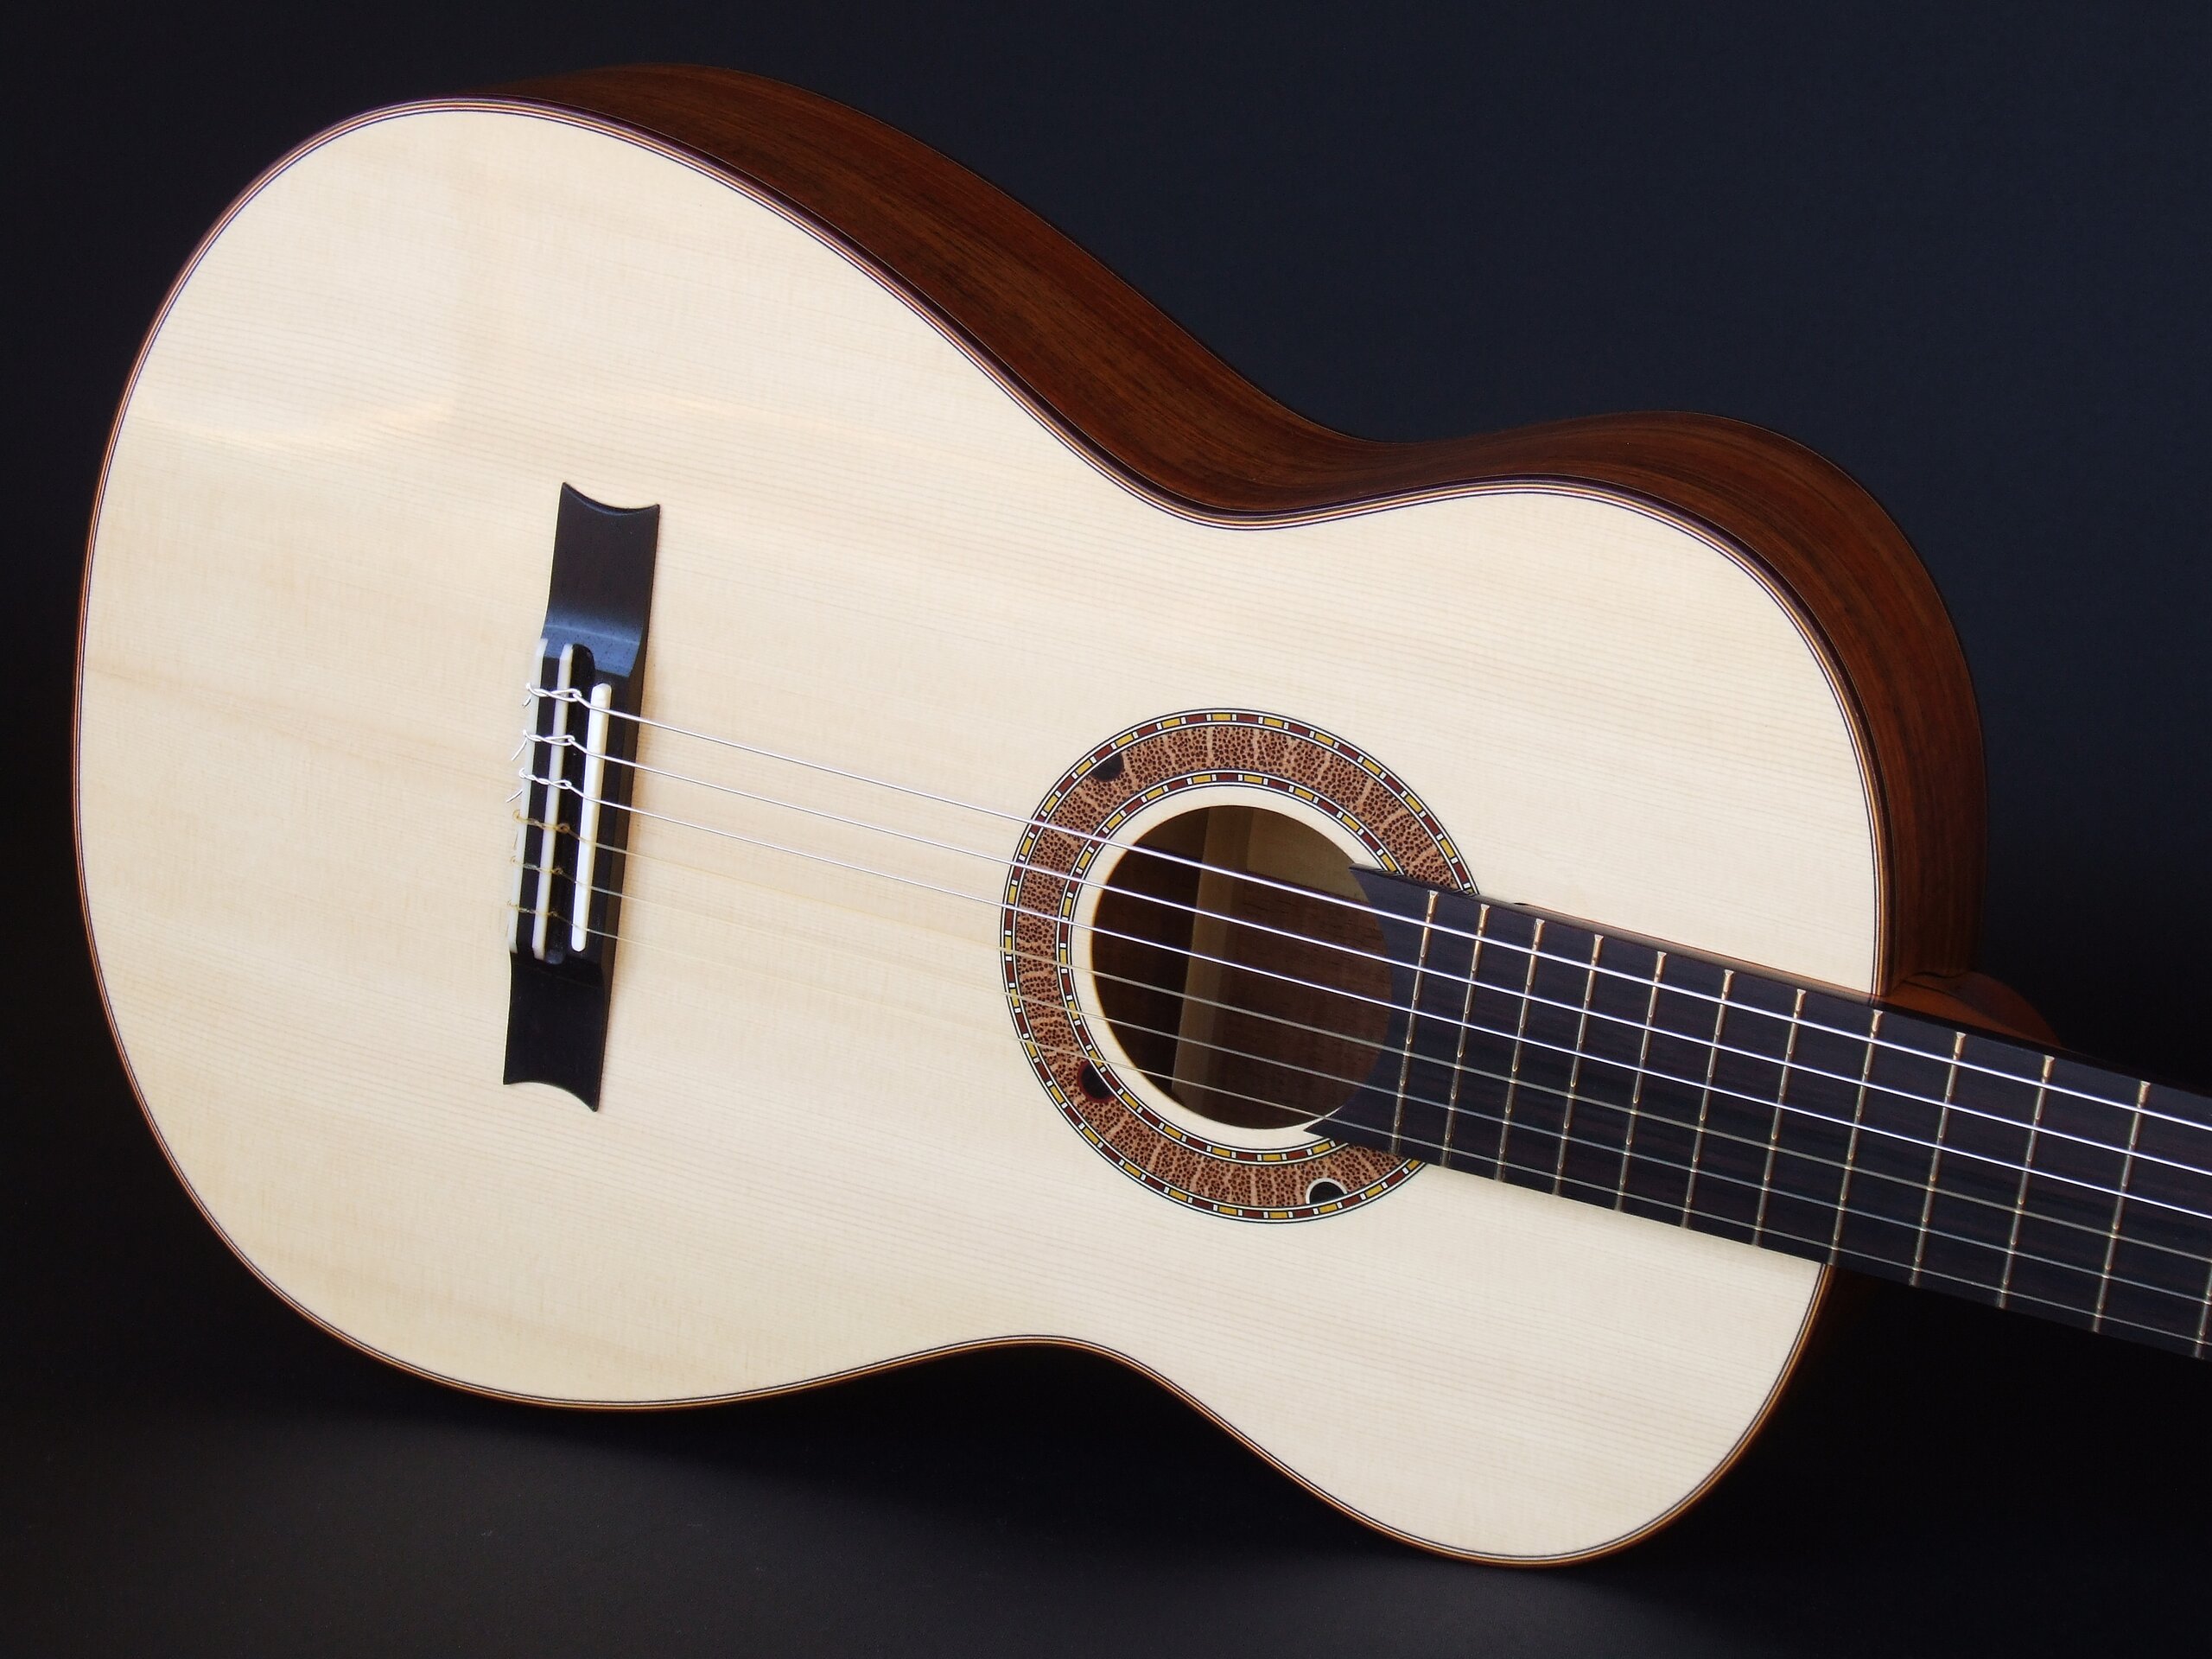 Custom guitars. Gore small body spruce topped classical guitar with Australiana rosette